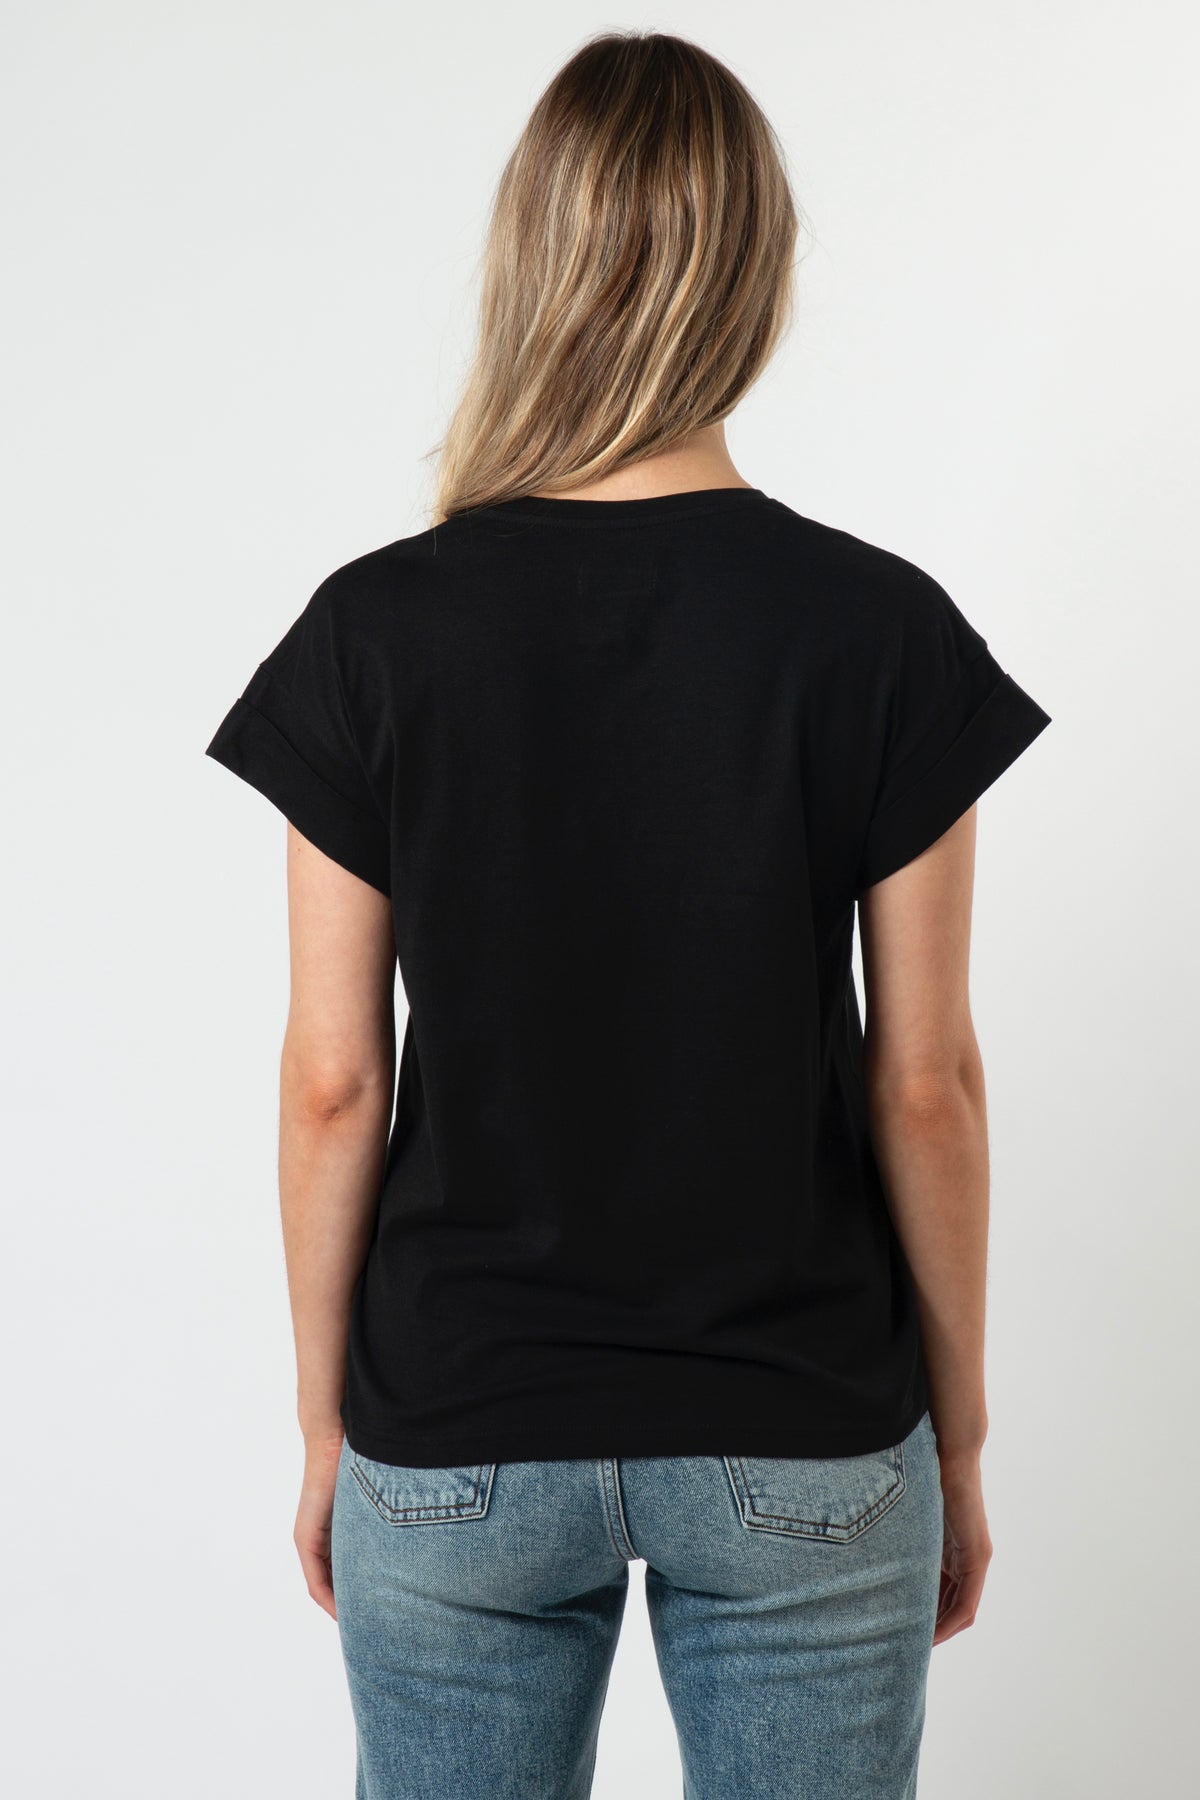 Cuff Sleeve T-Shirt Black With Silver Logo